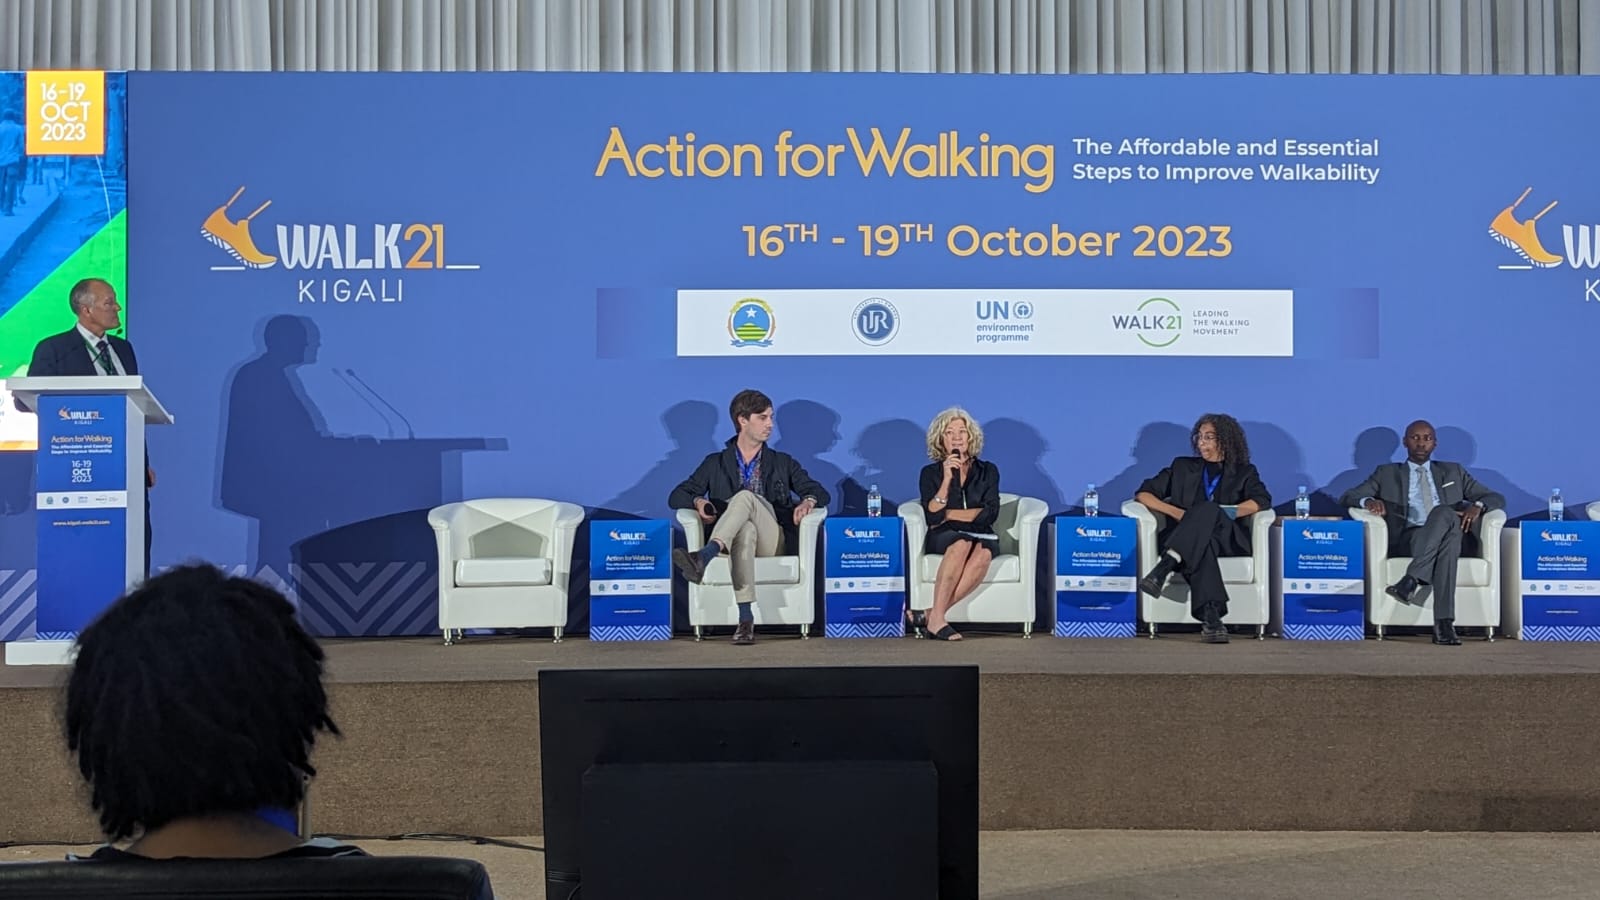 Walk21 Kigali: Action for Walking